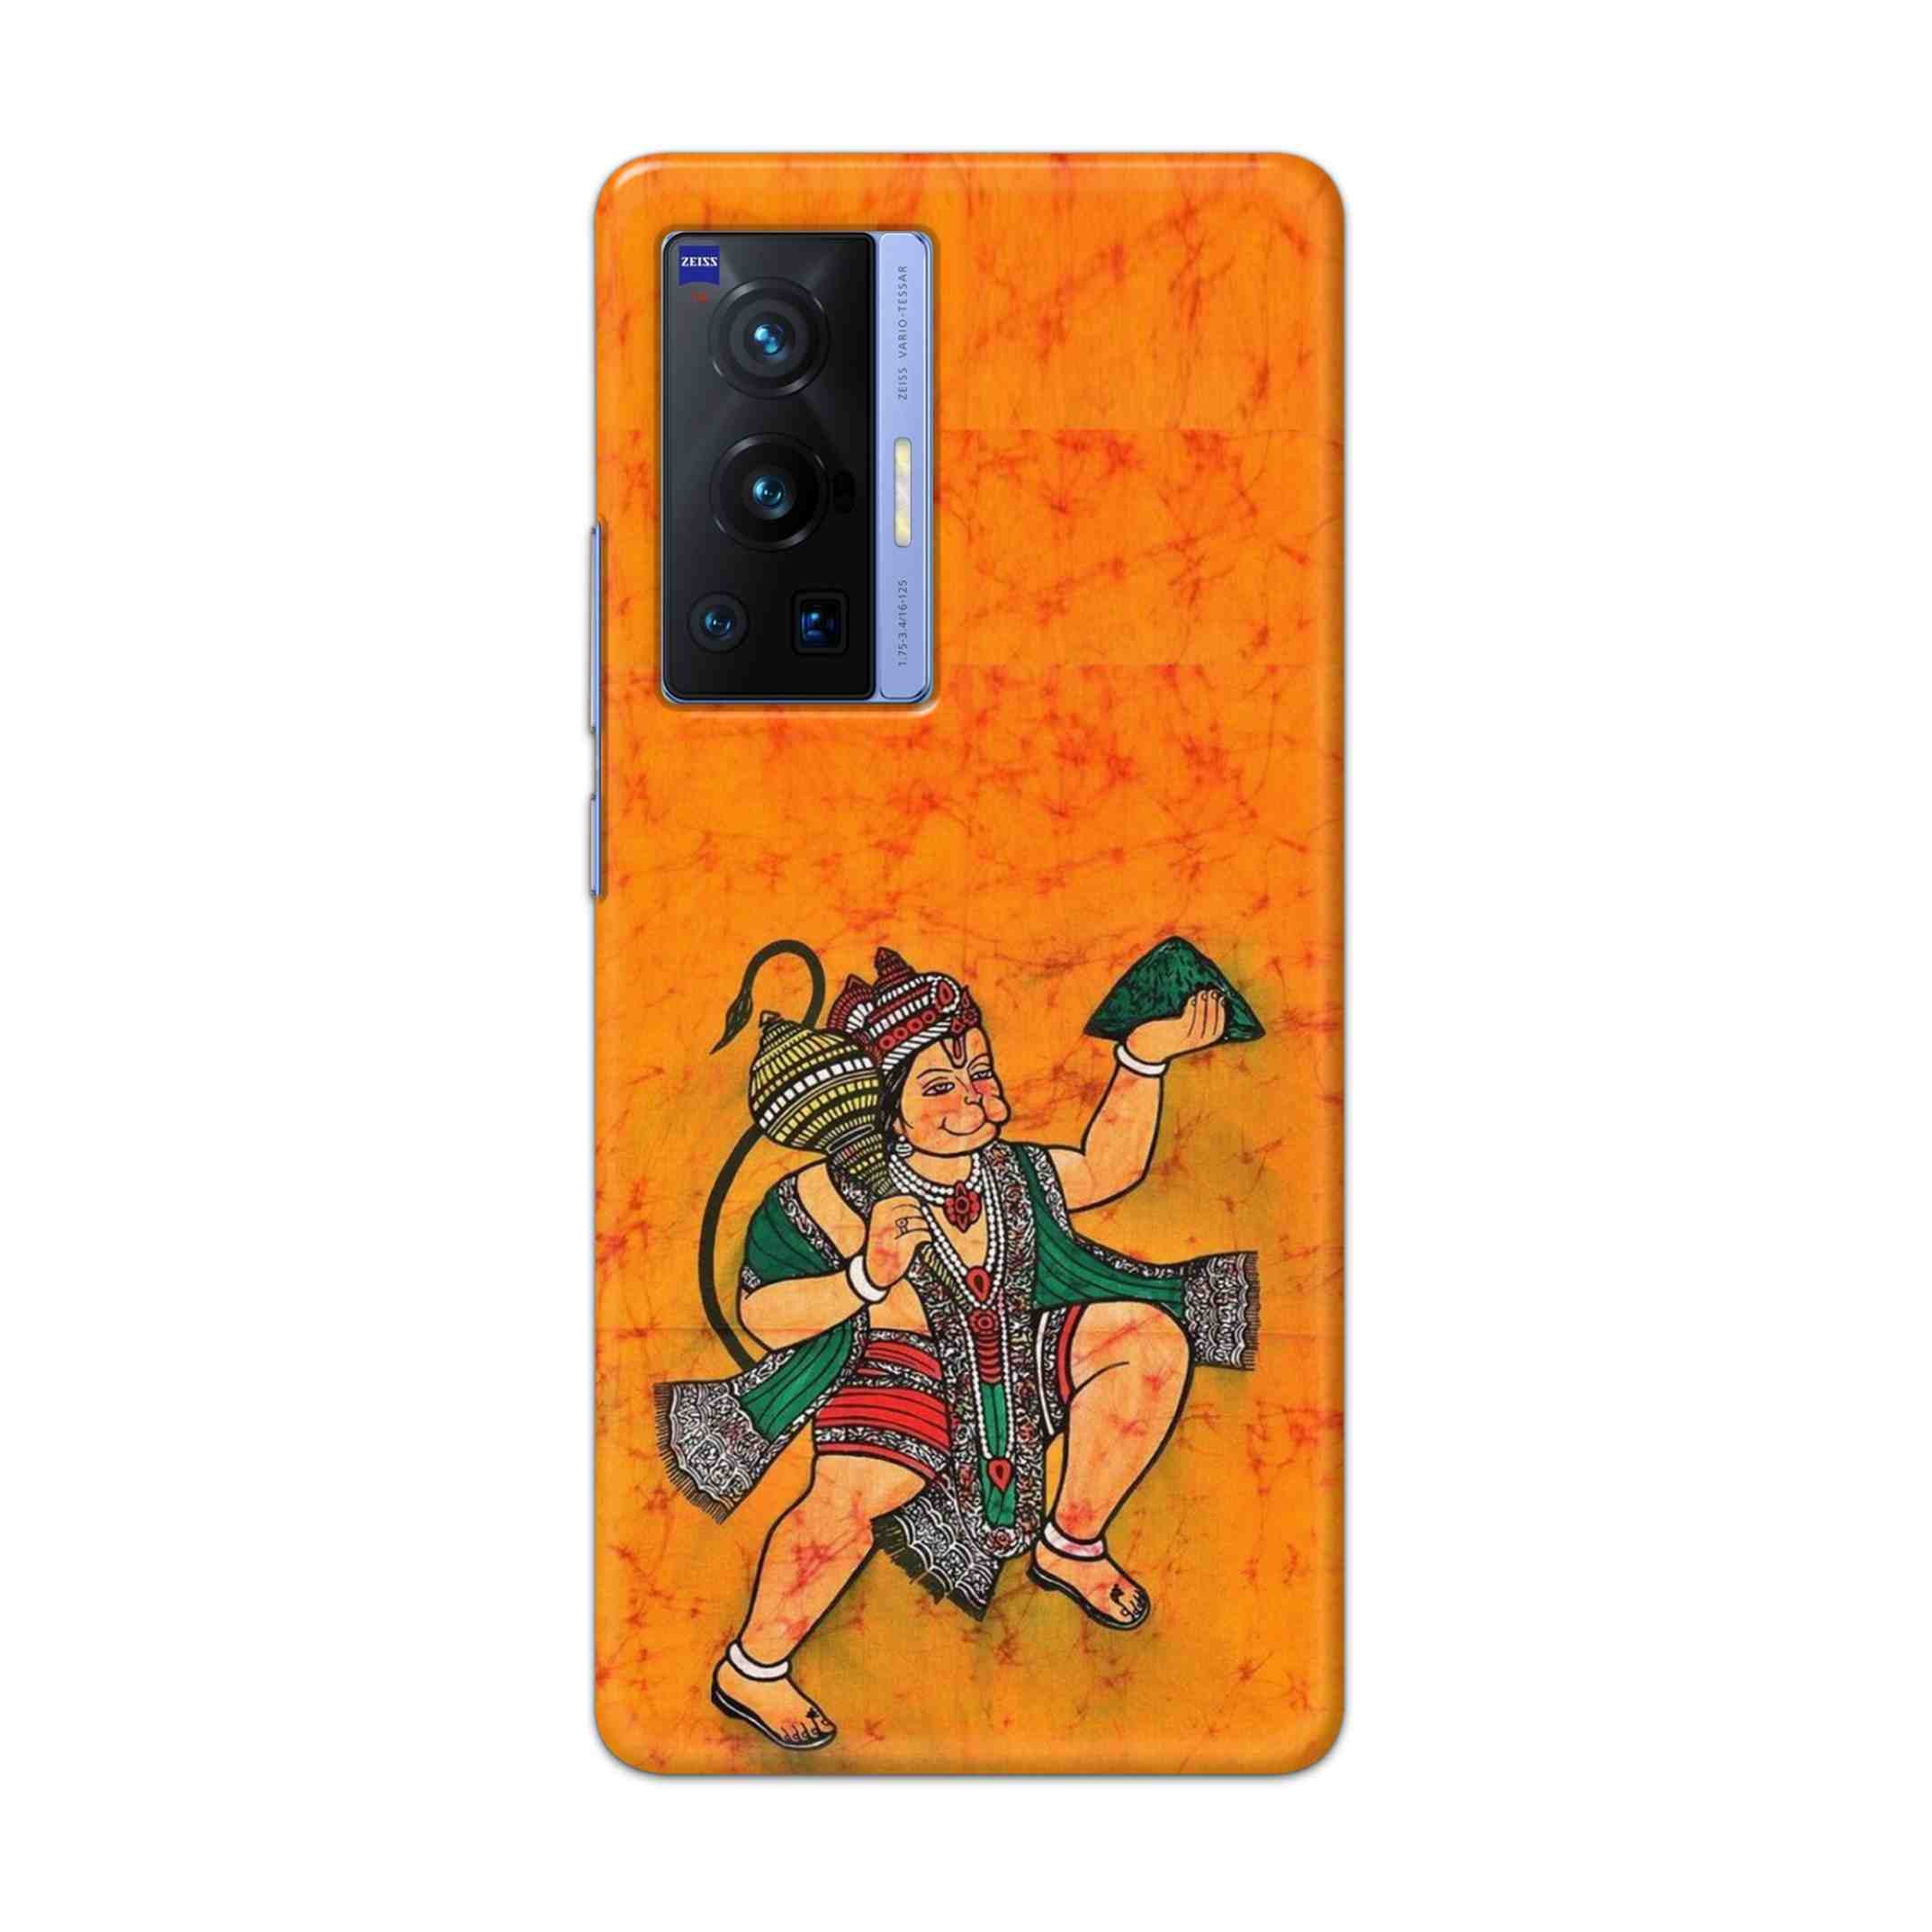 Buy Hanuman Ji Hard Back Mobile Phone Case Cover For Vivo X70 Pro Online